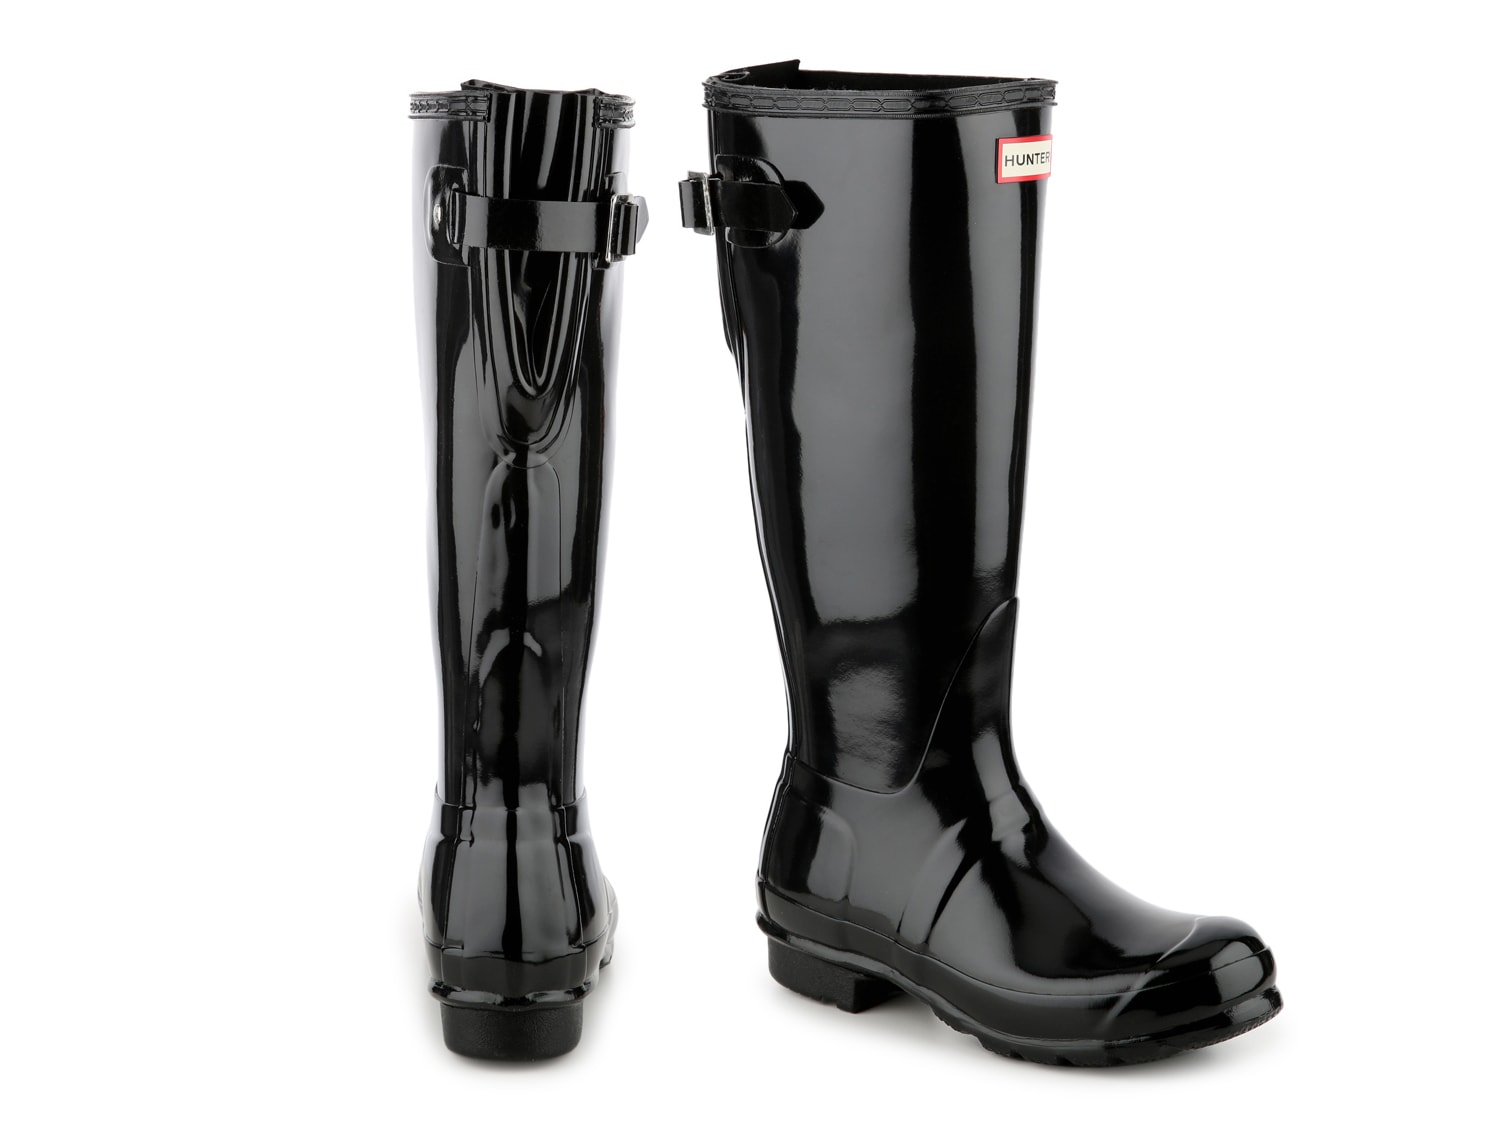 popular rain boot brands